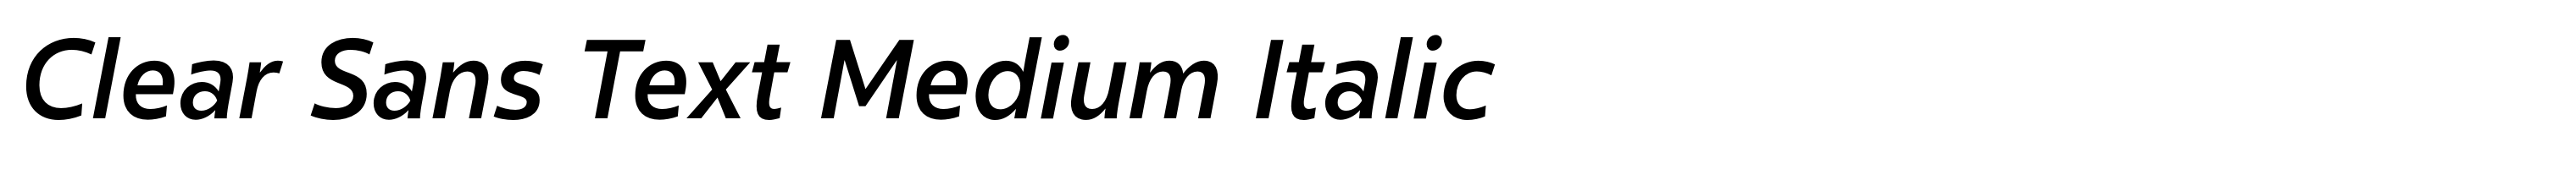 Clear Sans Text Medium Italic